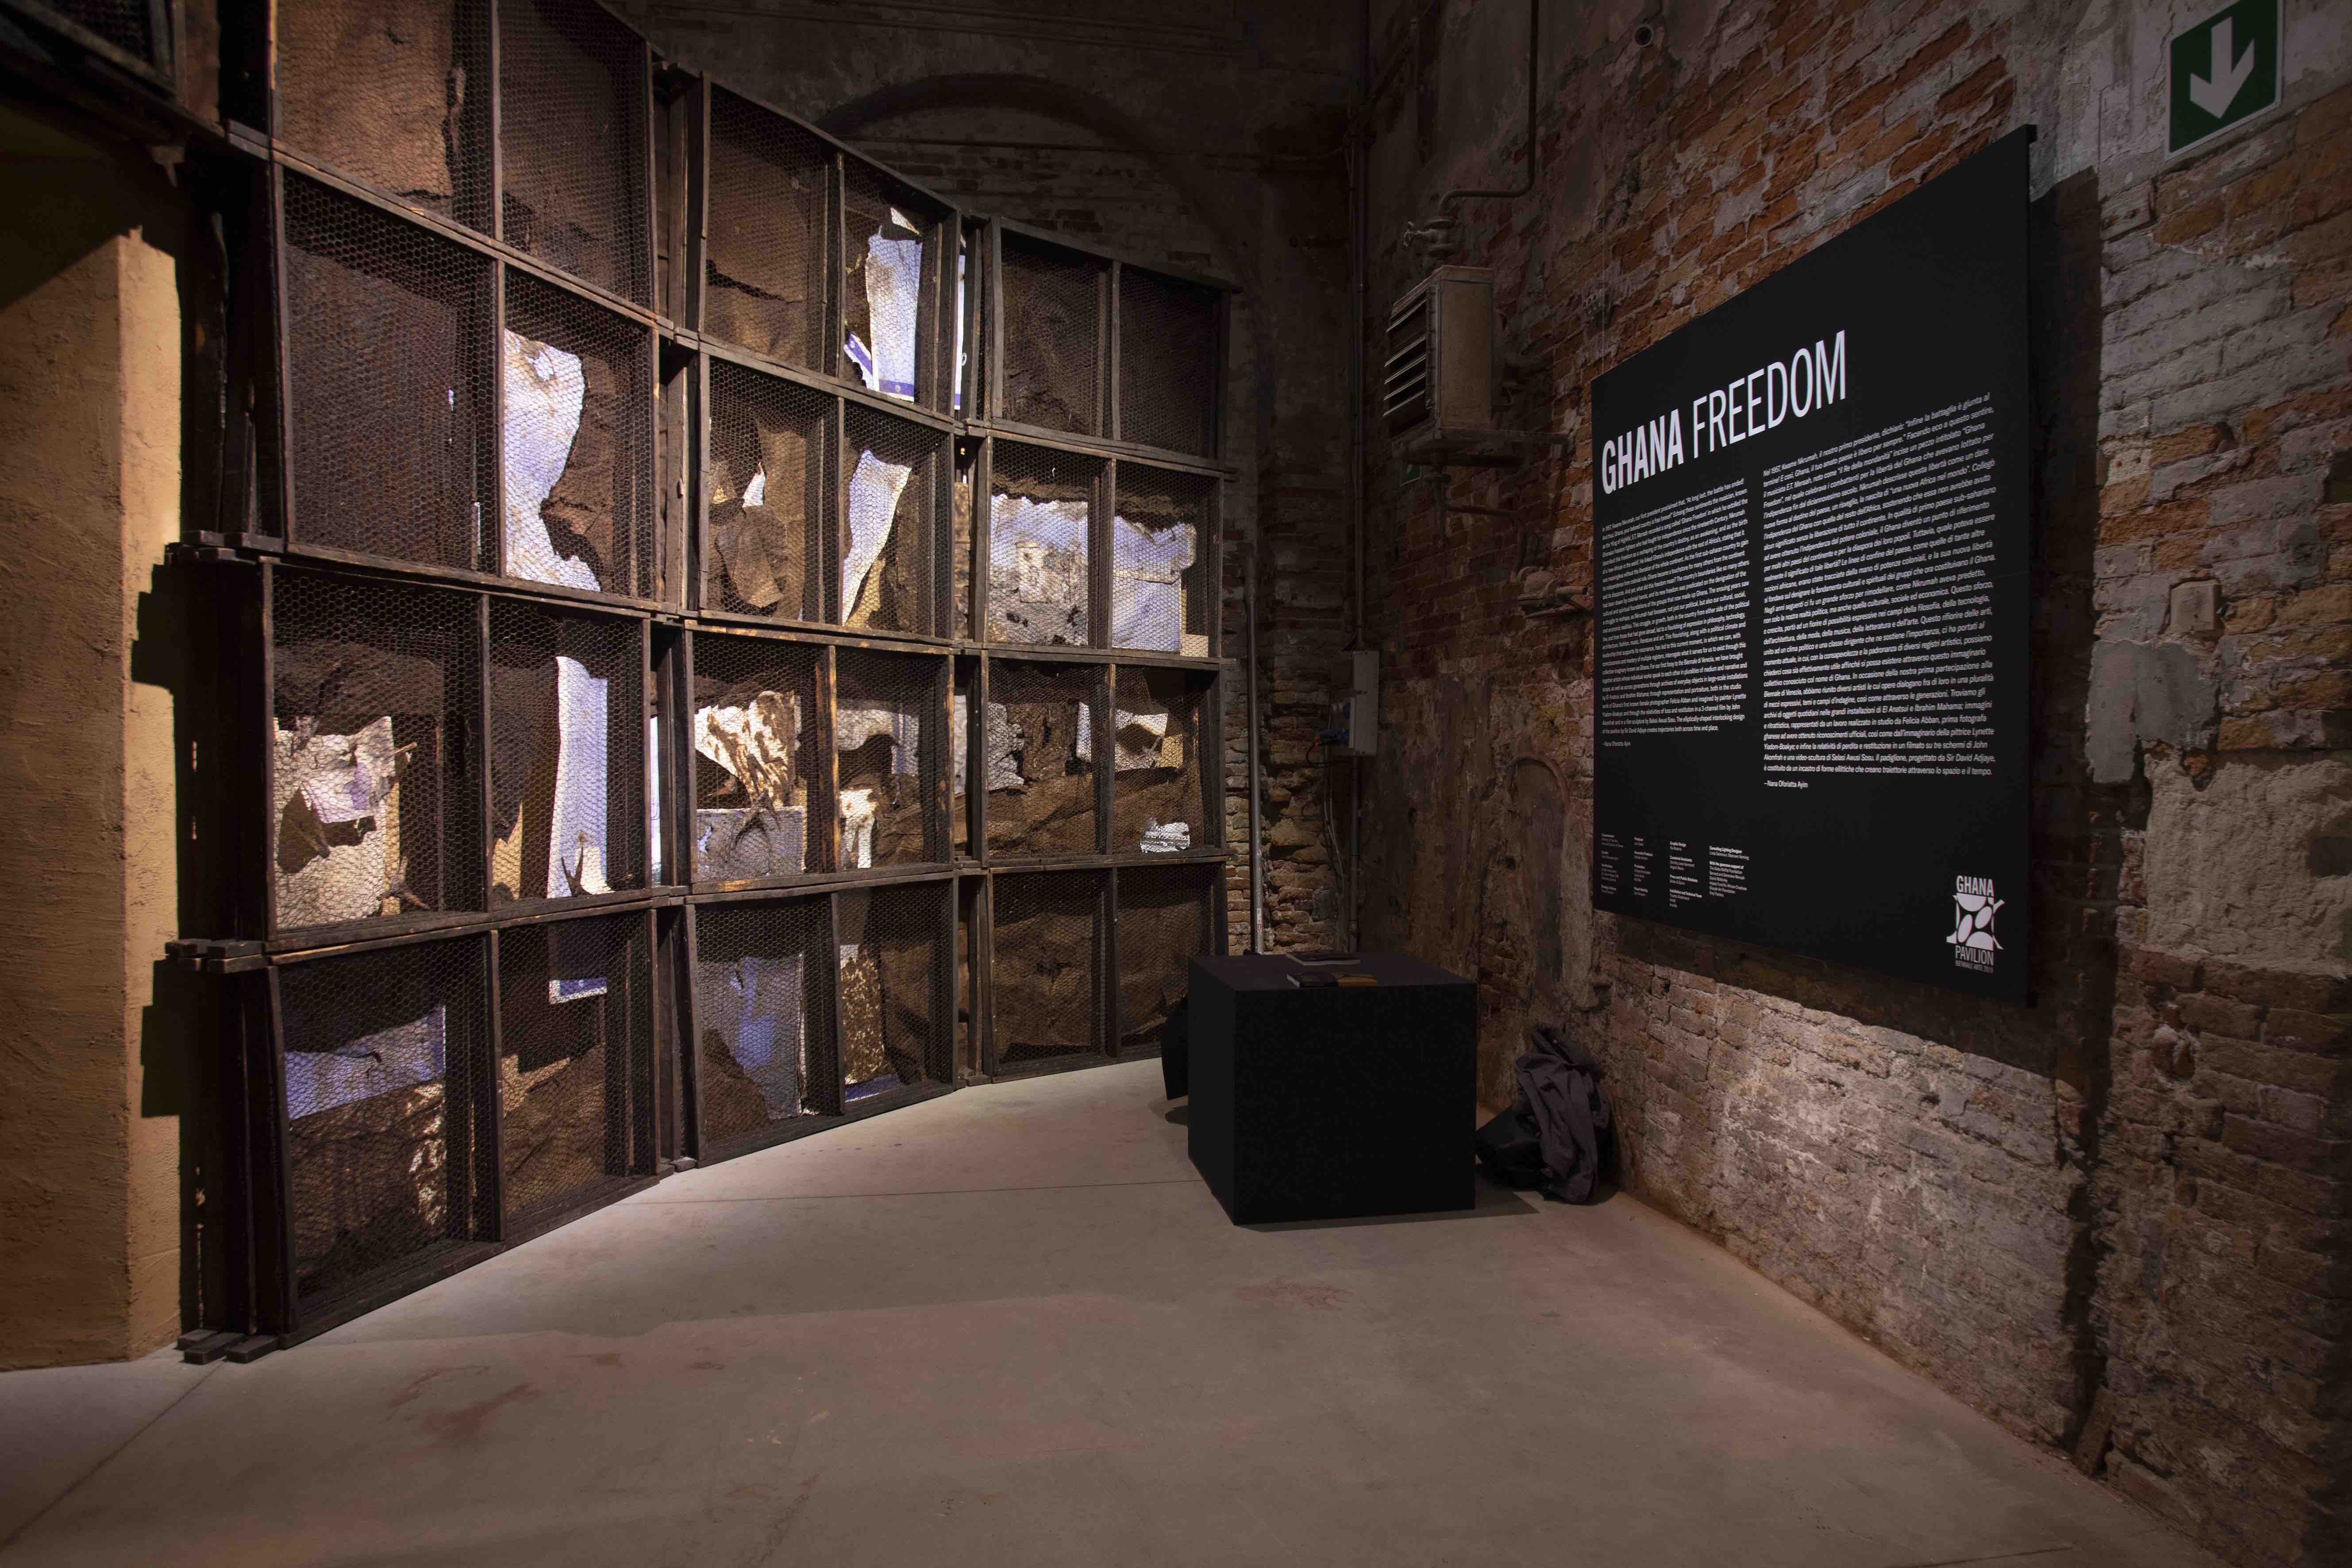 Ghana Pavilion at the Venice Biennale, Â© Italo Rondinella 2019